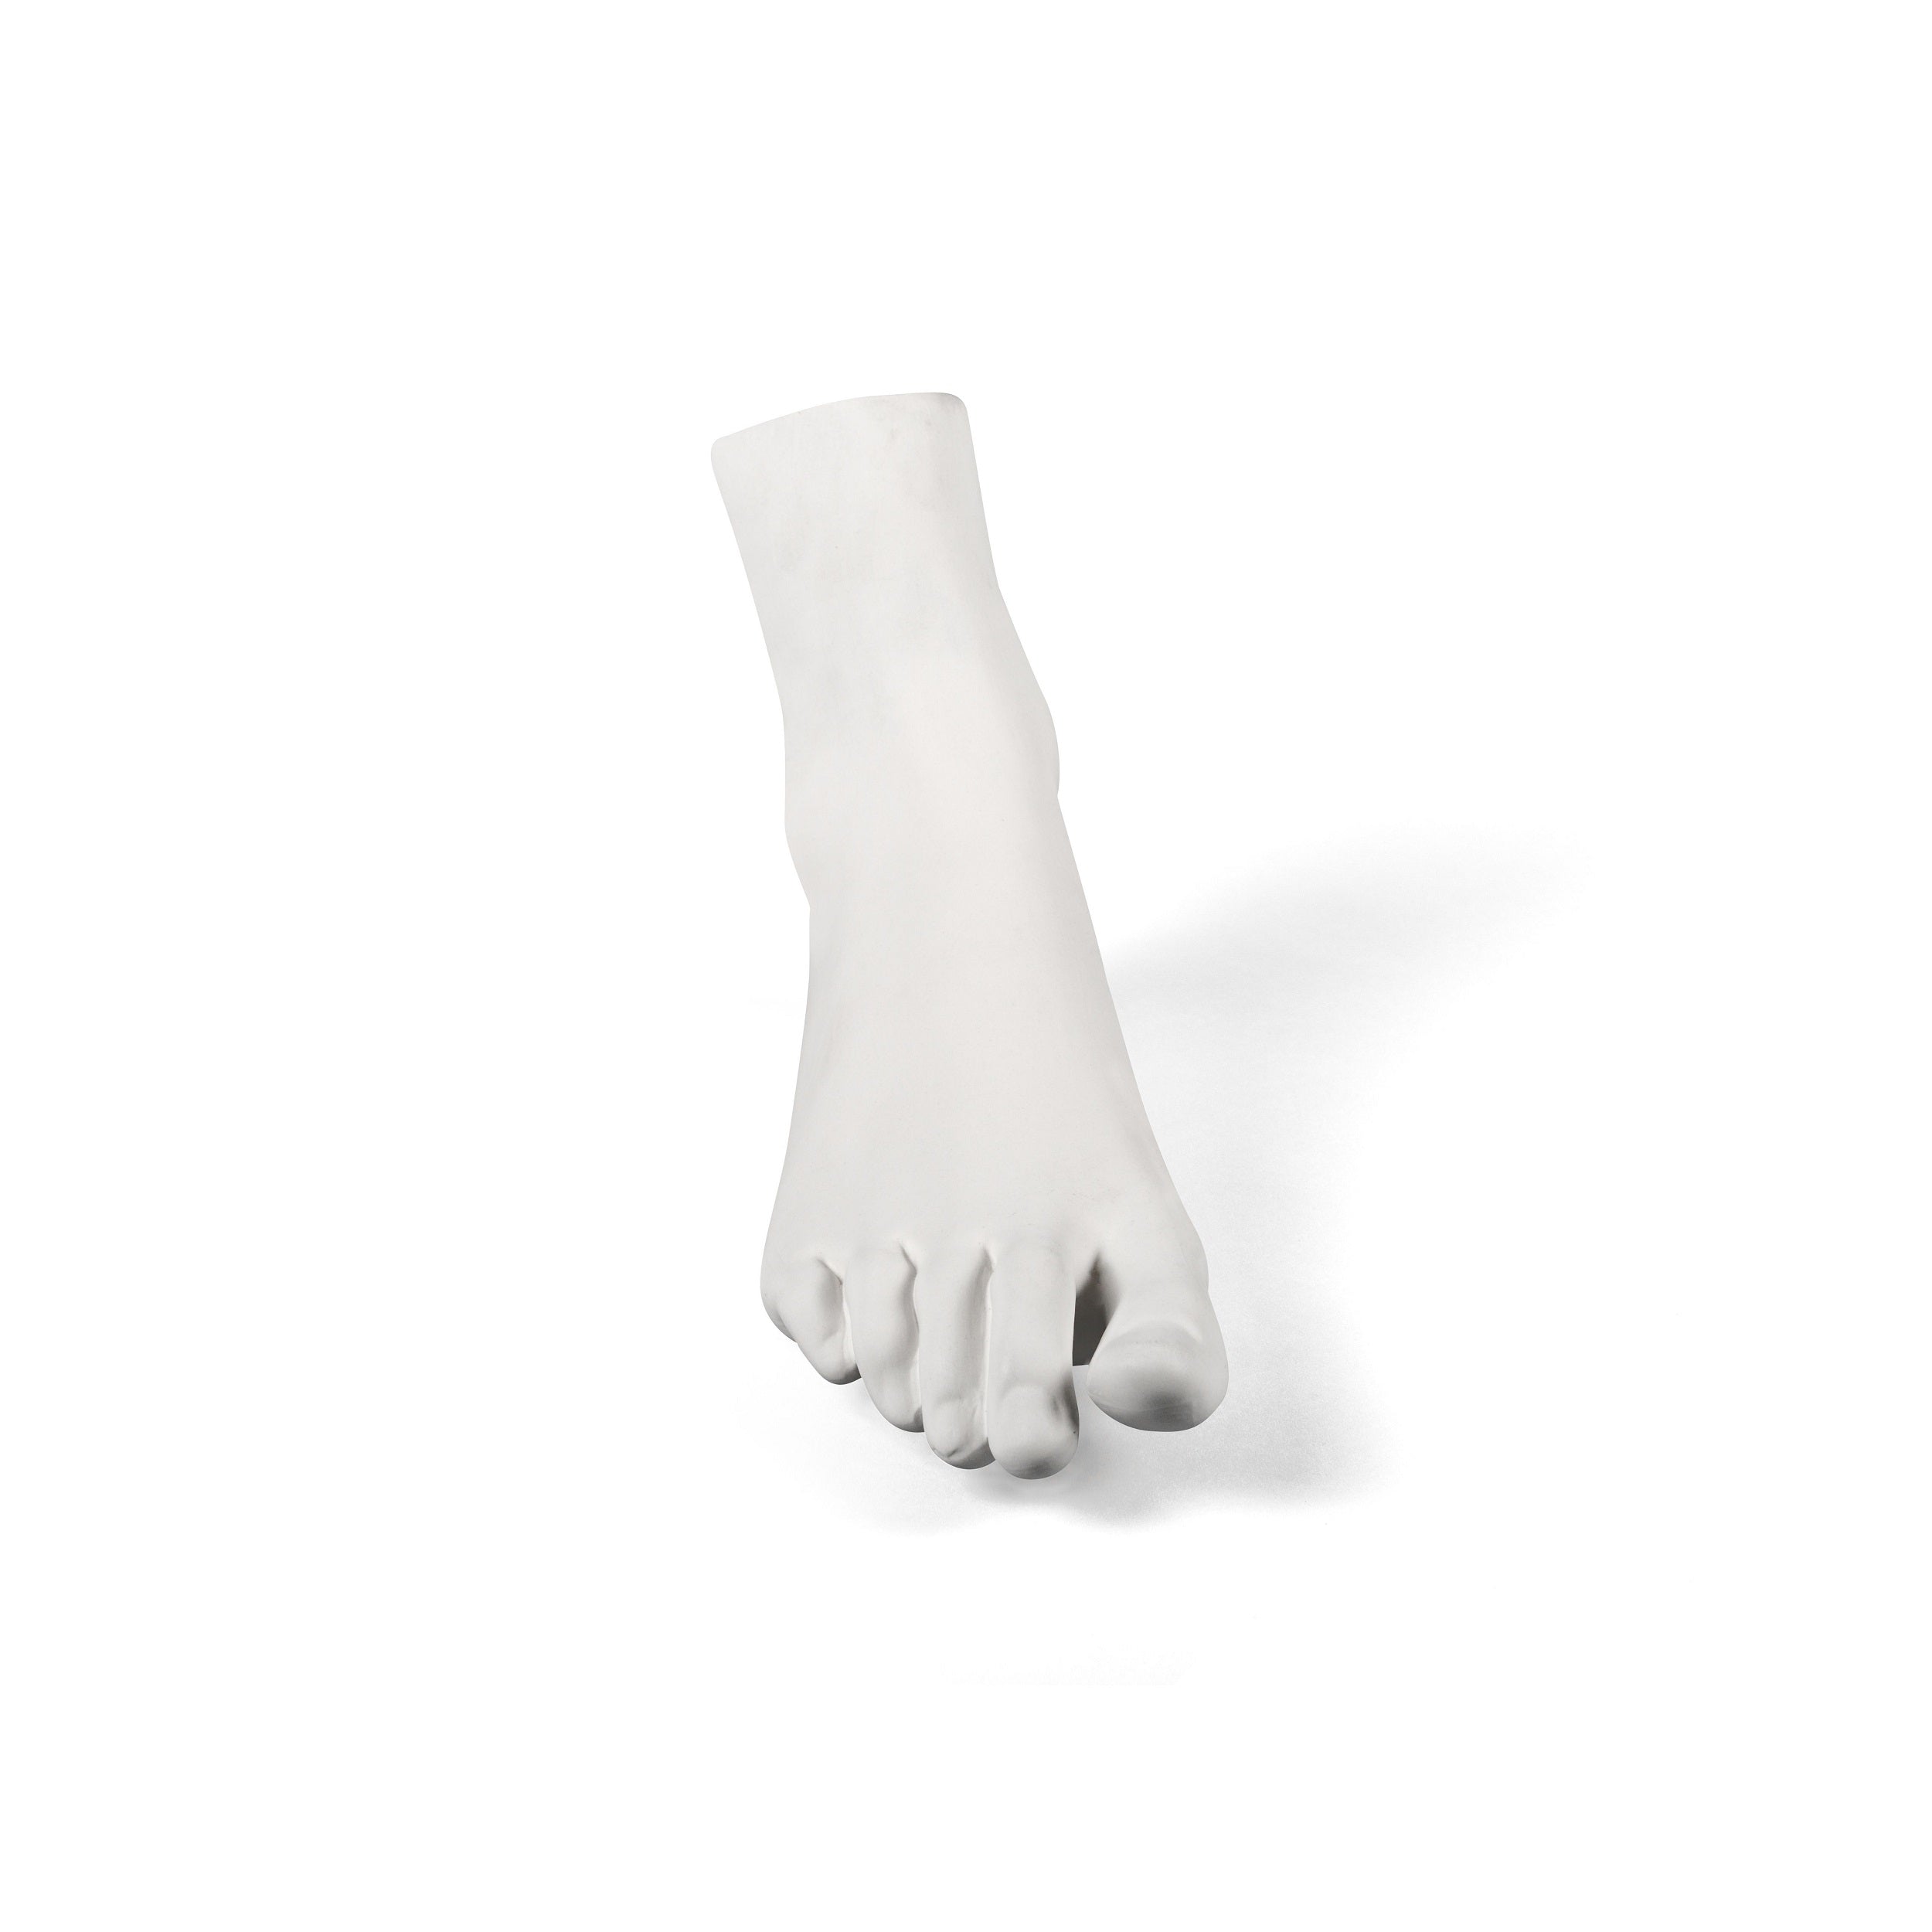 Seletti Memorabilia Mvsevm Porcelain Woman's Foot